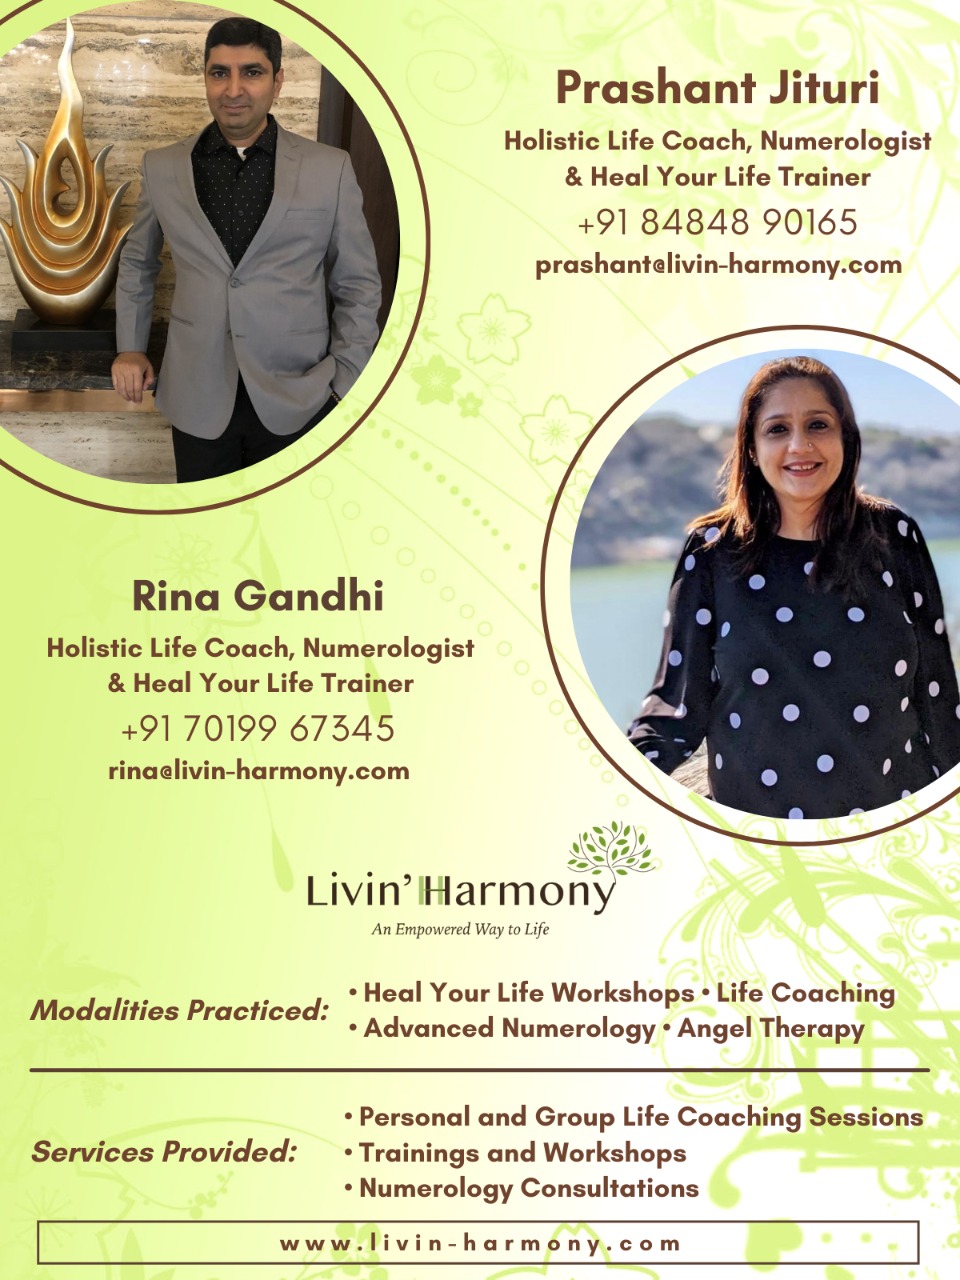 Life Coaching by Rina Gandhi and Prashant Jituri - Hyderabad